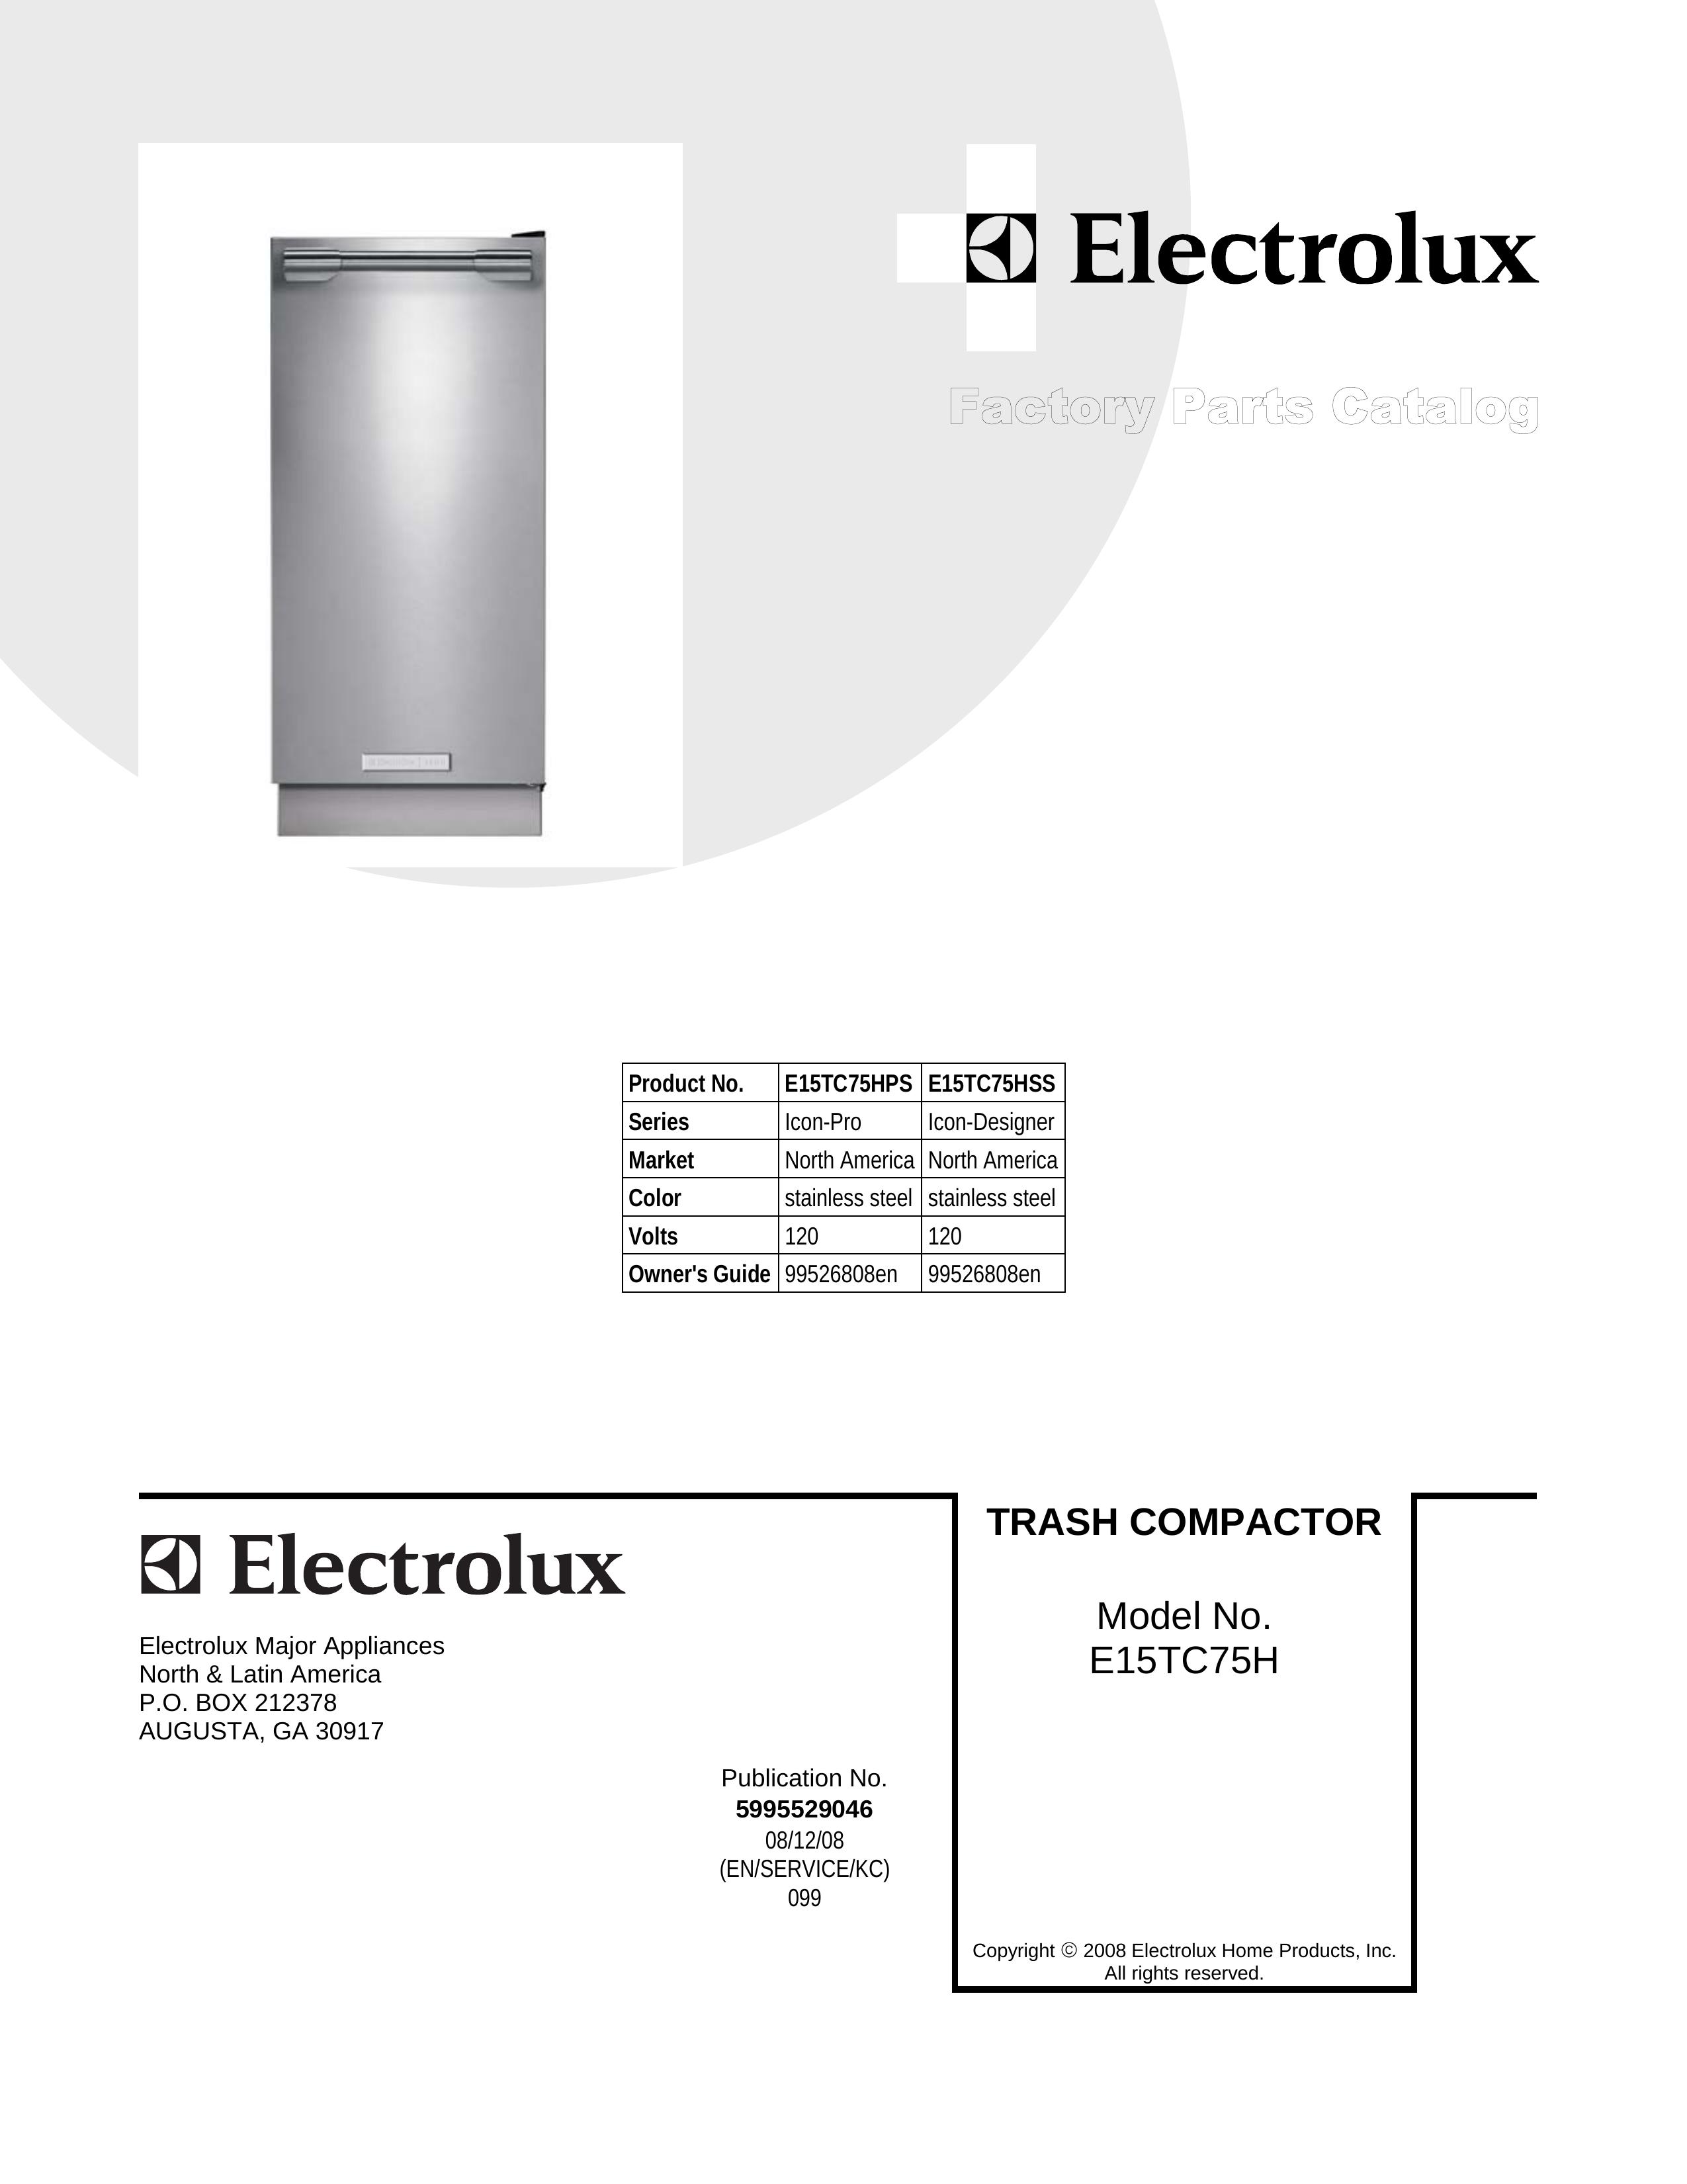 Electrolux E15TC75H Trash Compactor User Manual